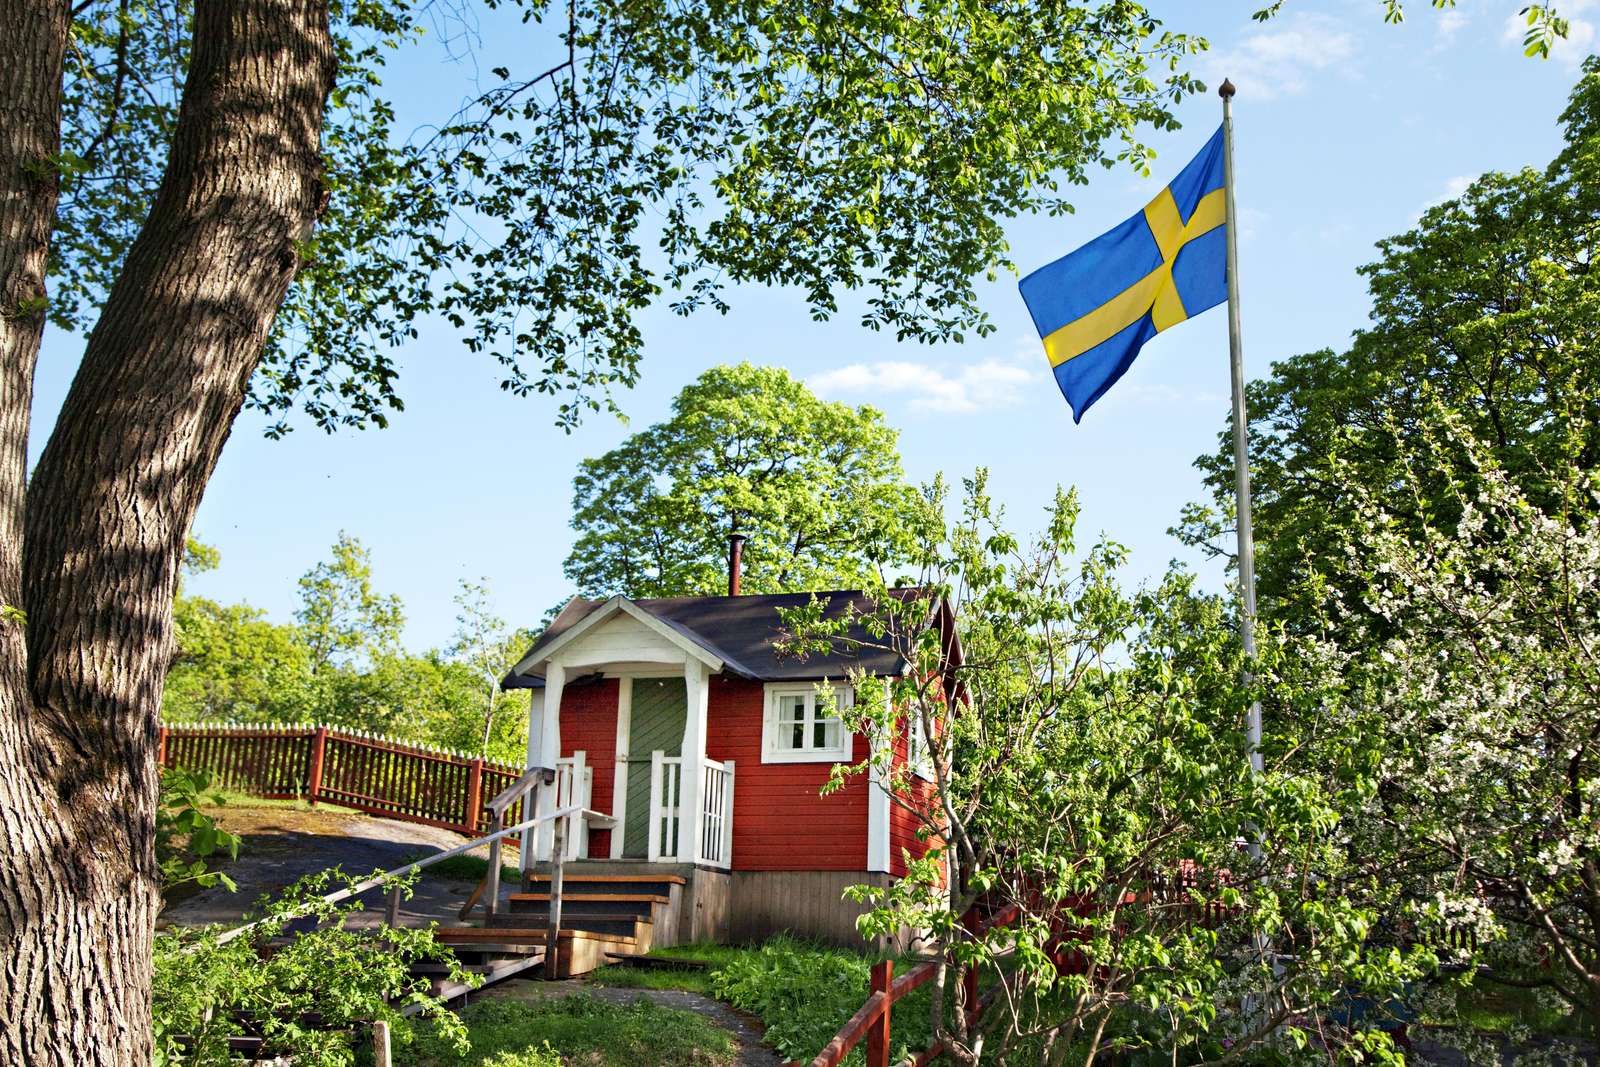 Cabin in Sweden